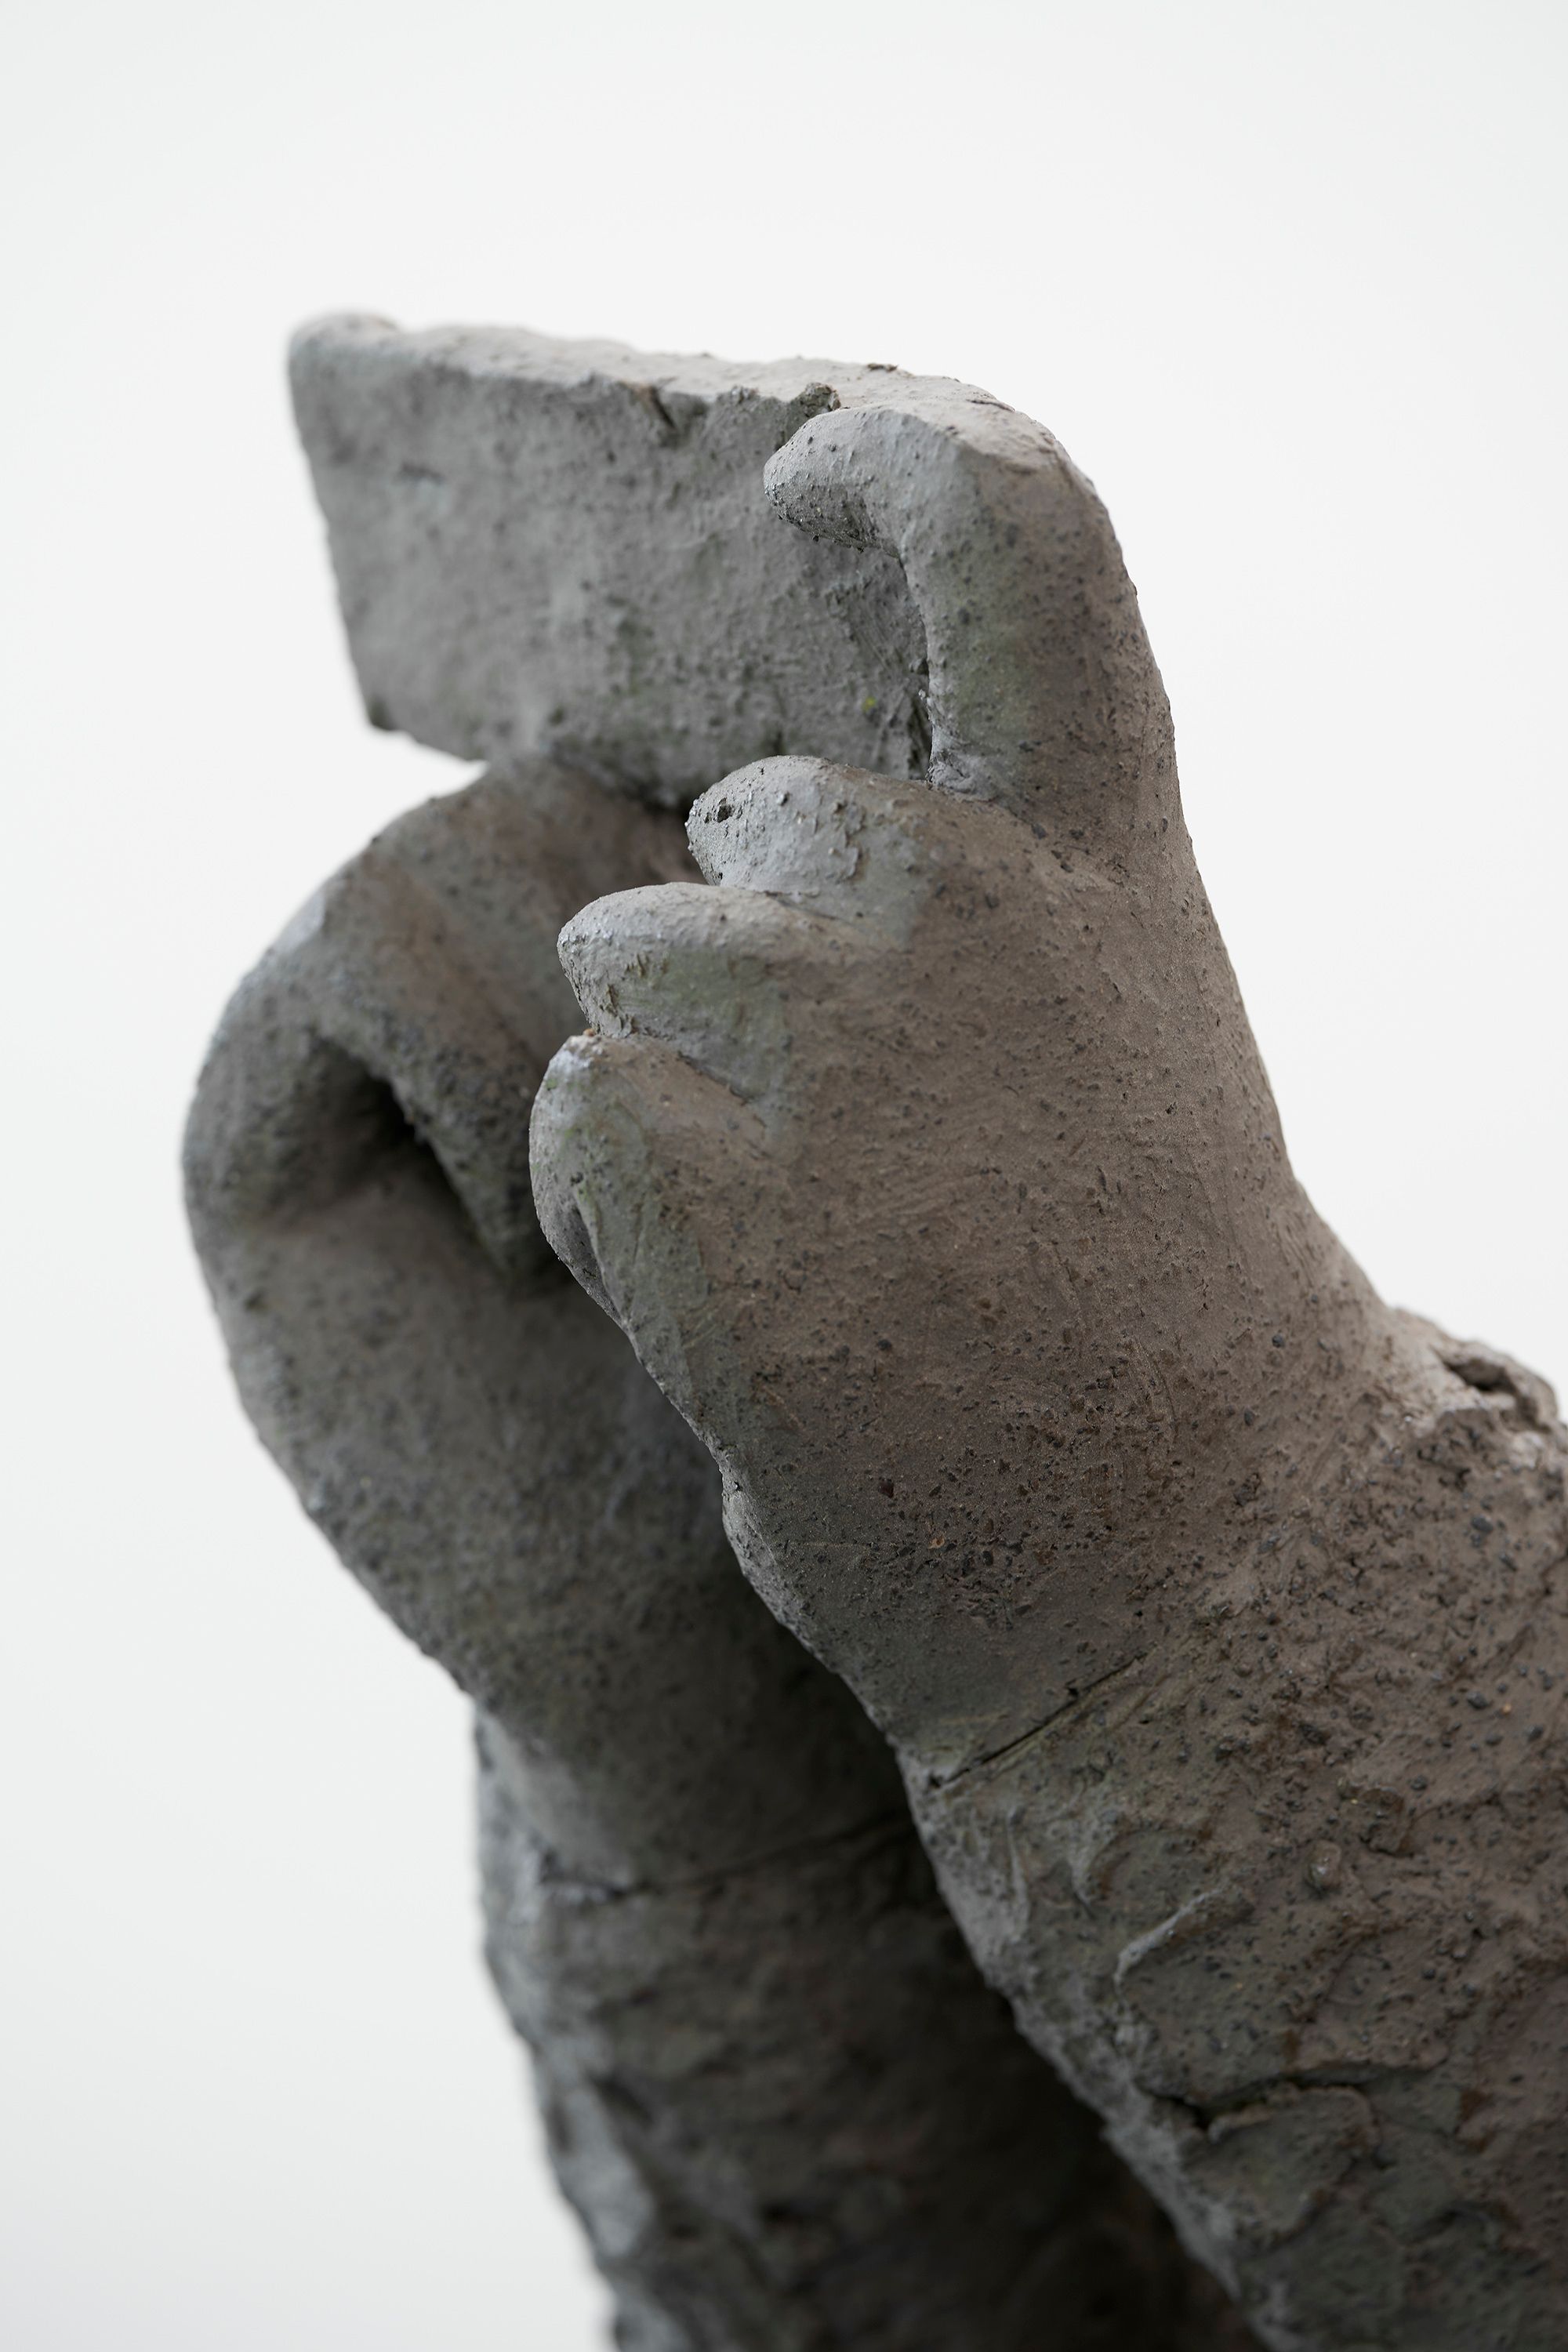 Judith Hopf, Phone User 5, 2021, Clay, concrete plinth, 170 ⁠× ⁠48.5 ⁠× ⁠67 ⁠⁠cm